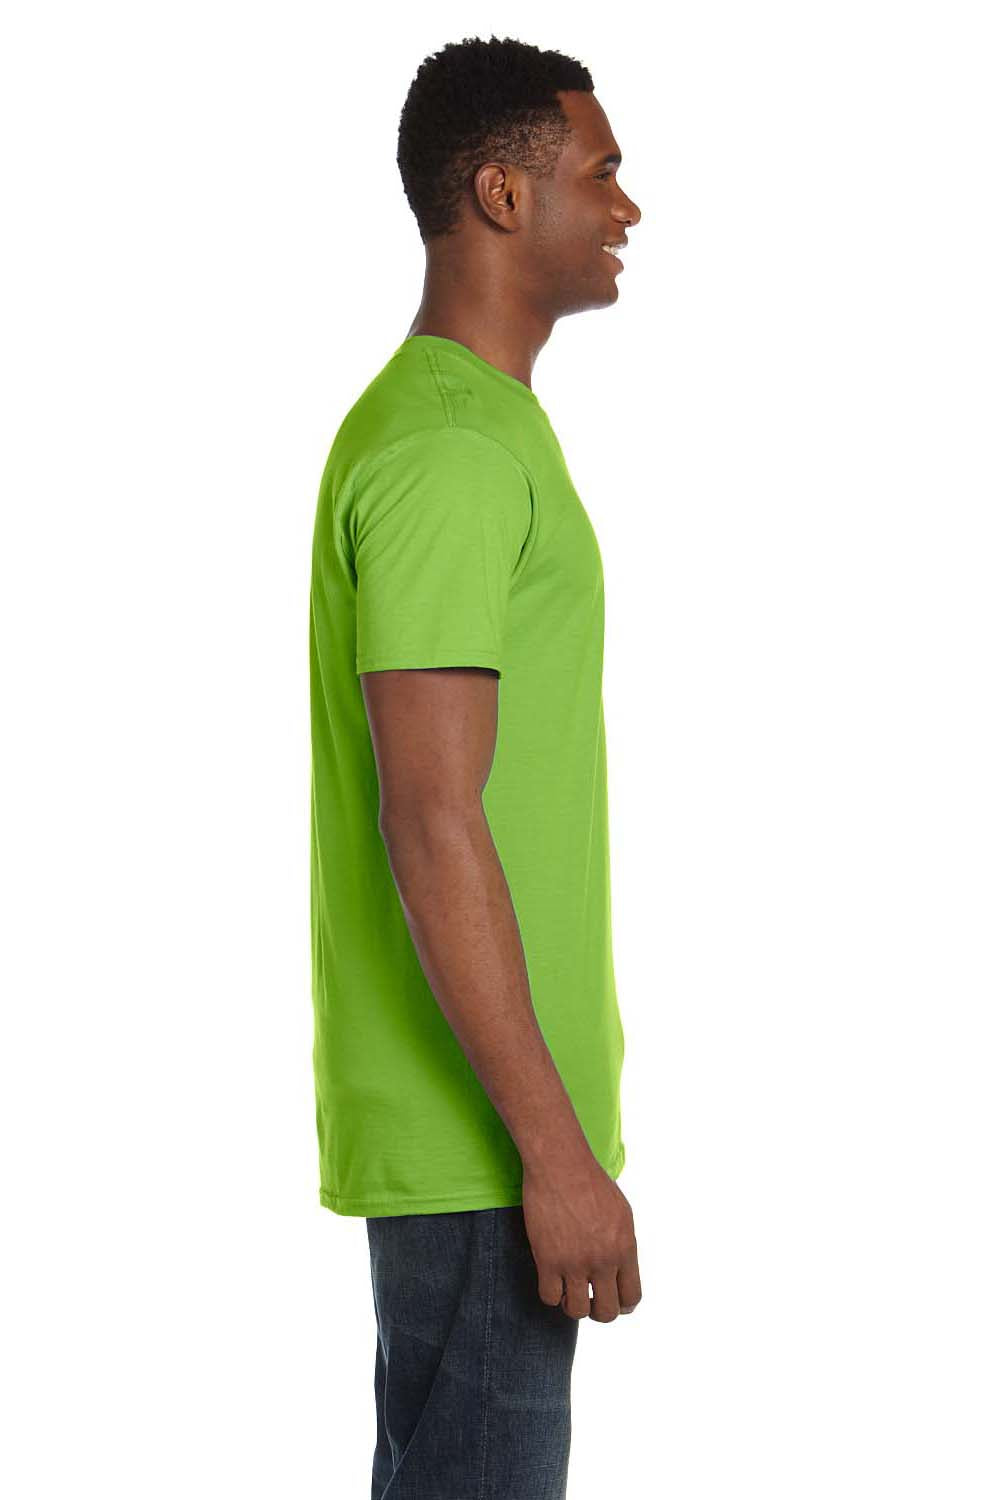 Hanes 4980 Mens Nano-T Short Sleeve Crewneck T-Shirt Lime Green Side